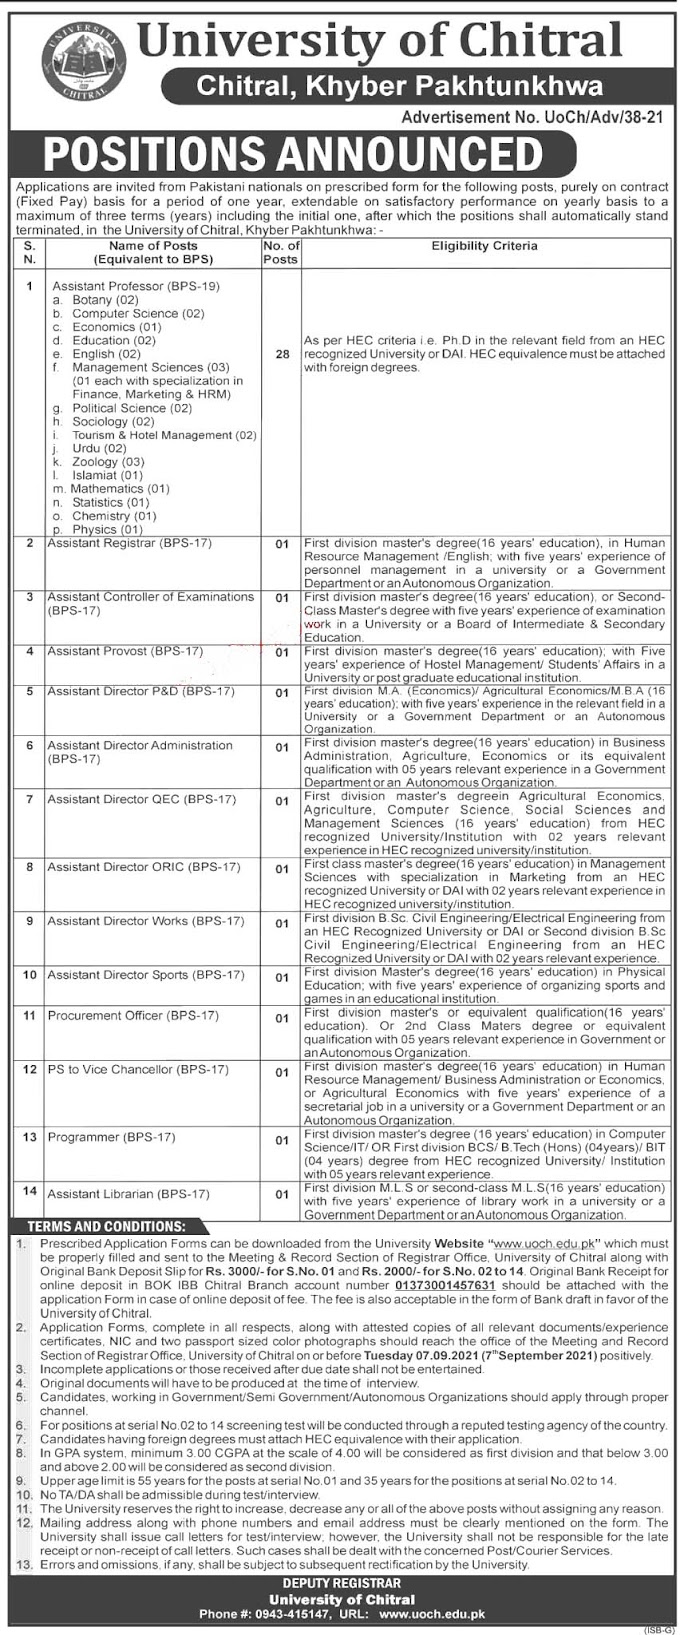 University of Chitral Today Latest  Jobs 2021 | Application Form via www.uoch.edu.pk